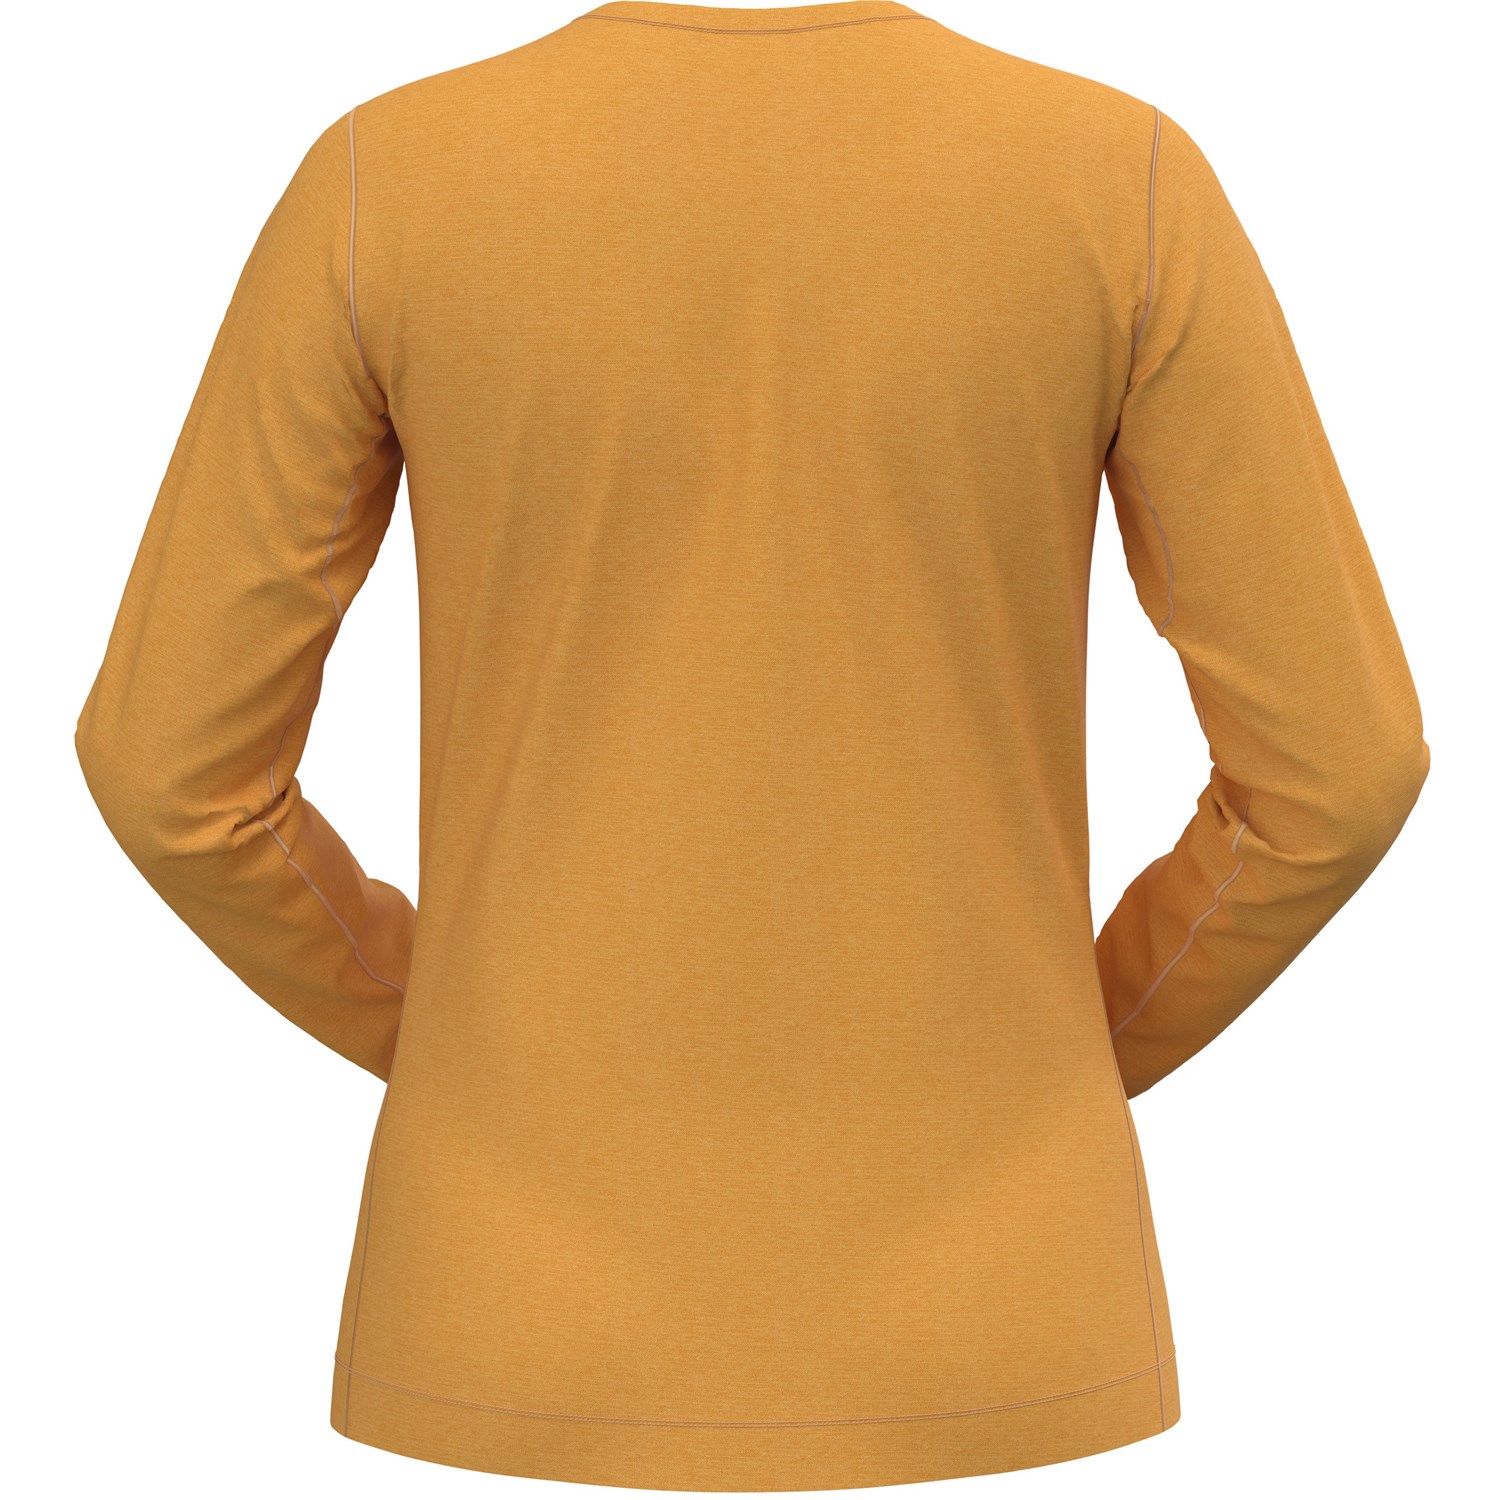 Arc'teryx Women’s Medium Orange Long Sleeve T-Shirt Activewear Top